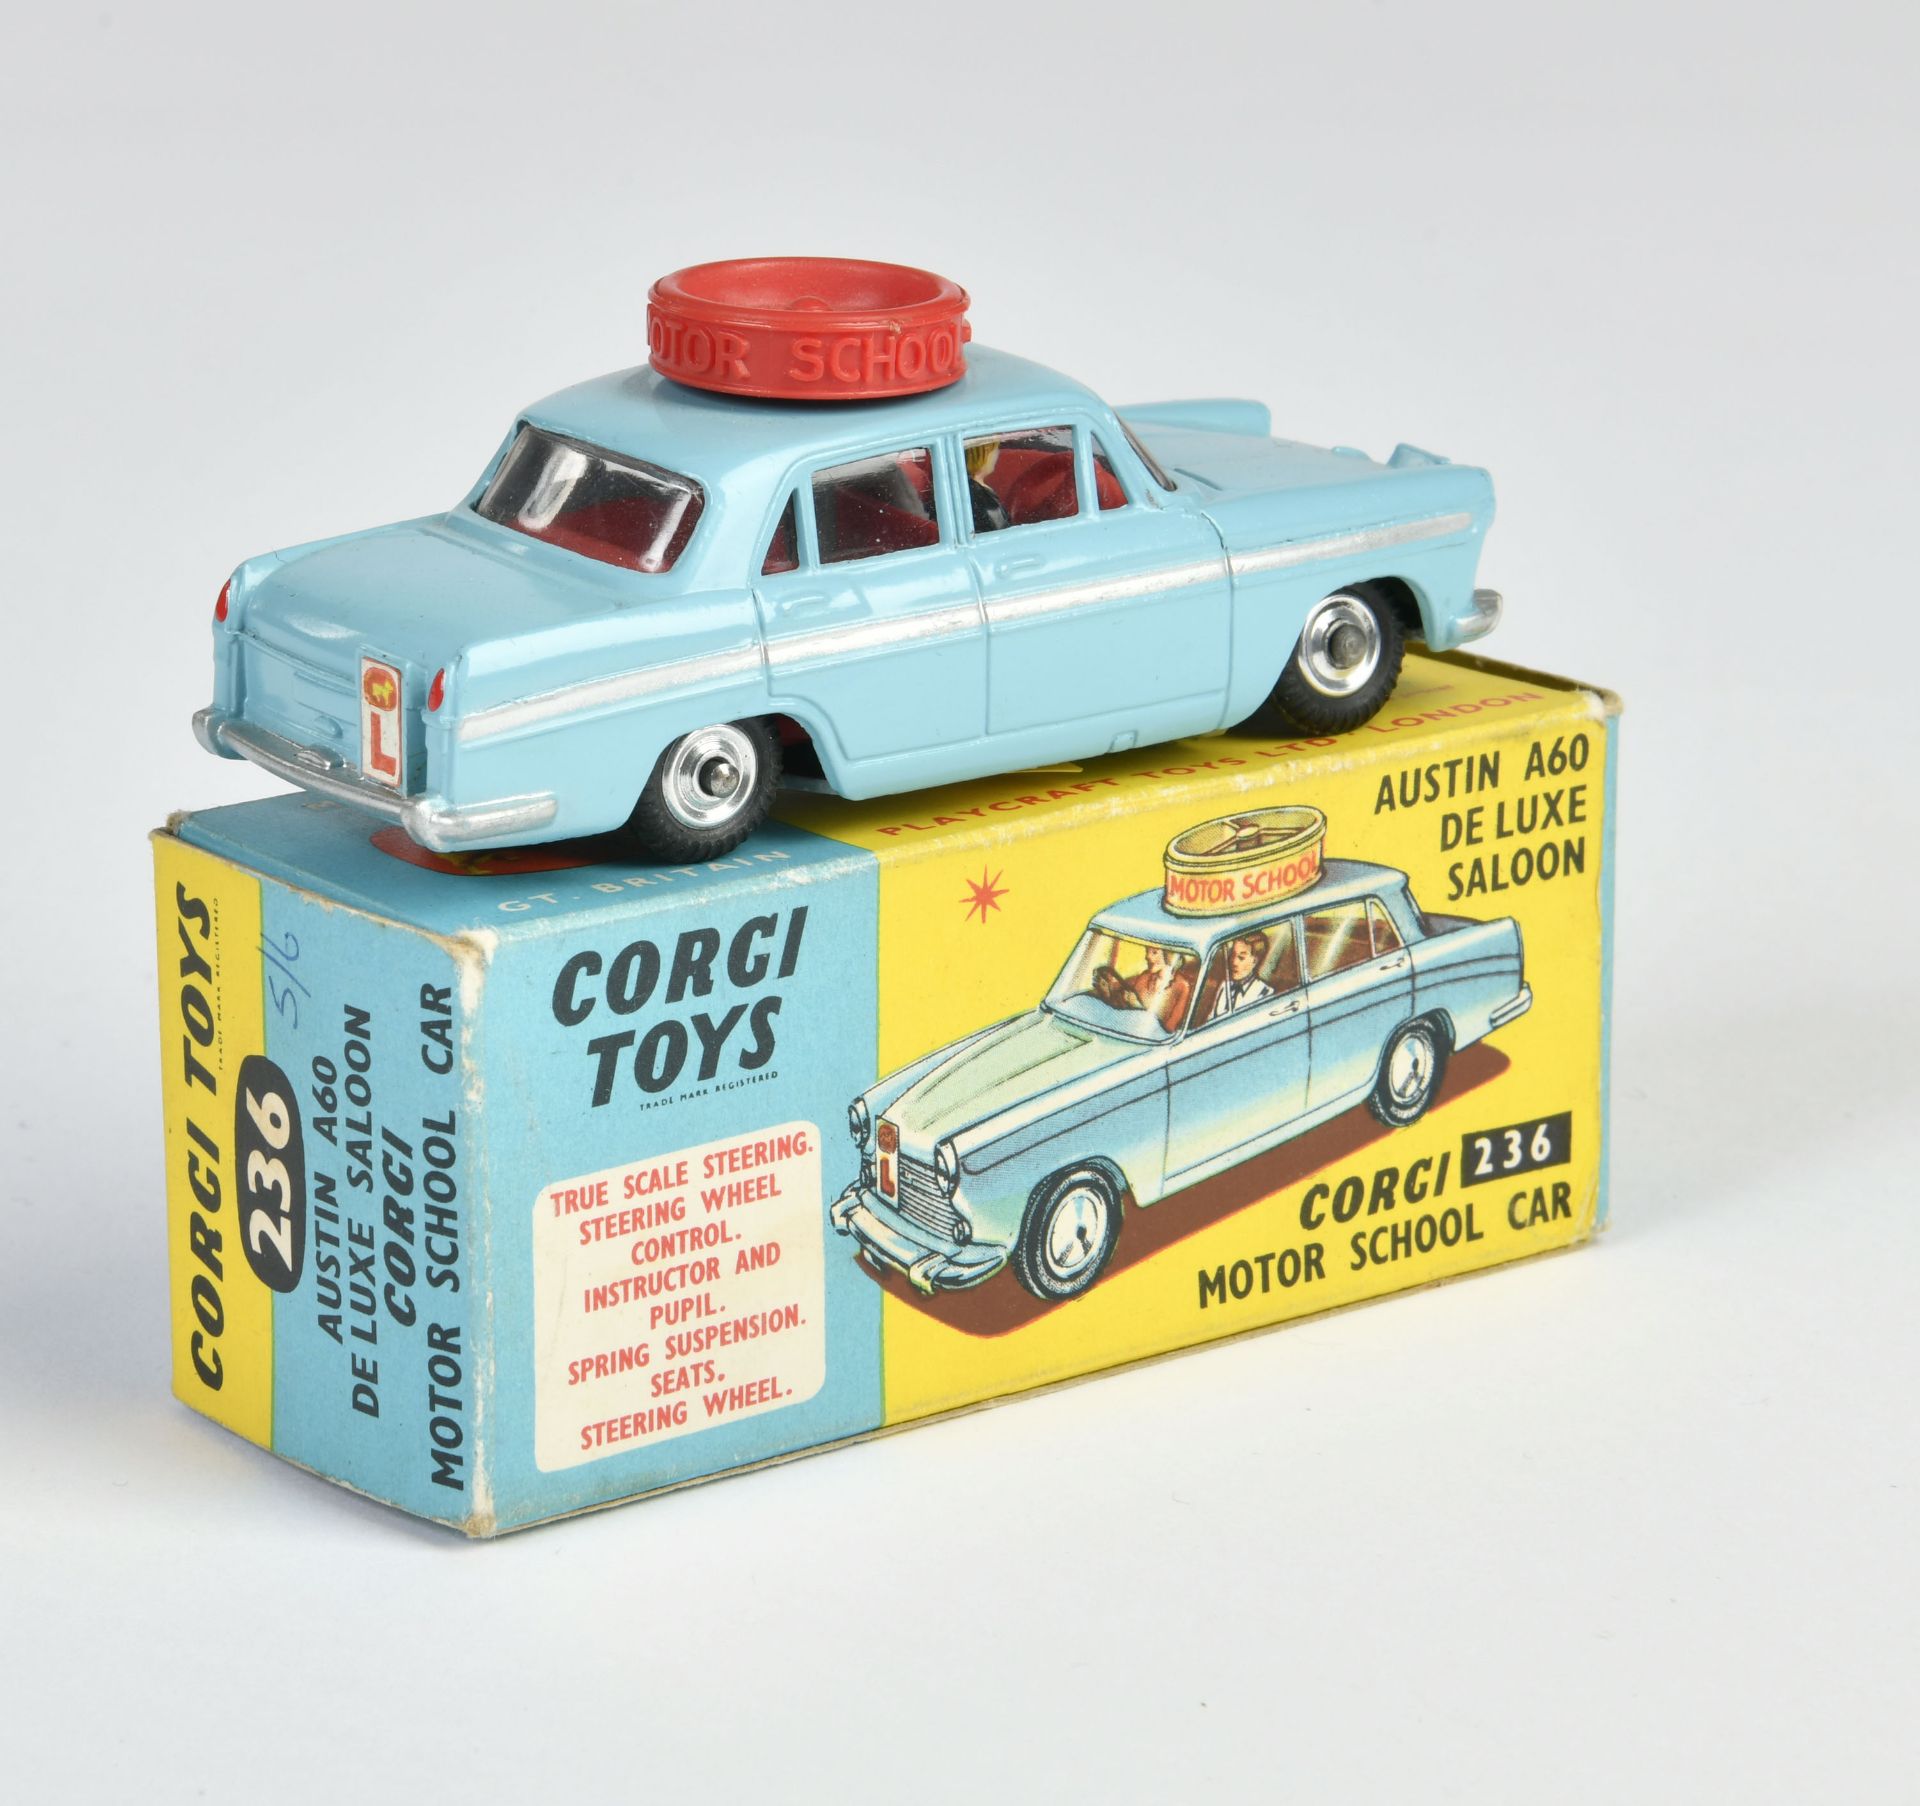 Corgi Toys, 236 Motor School Car - Bild 2 aus 2